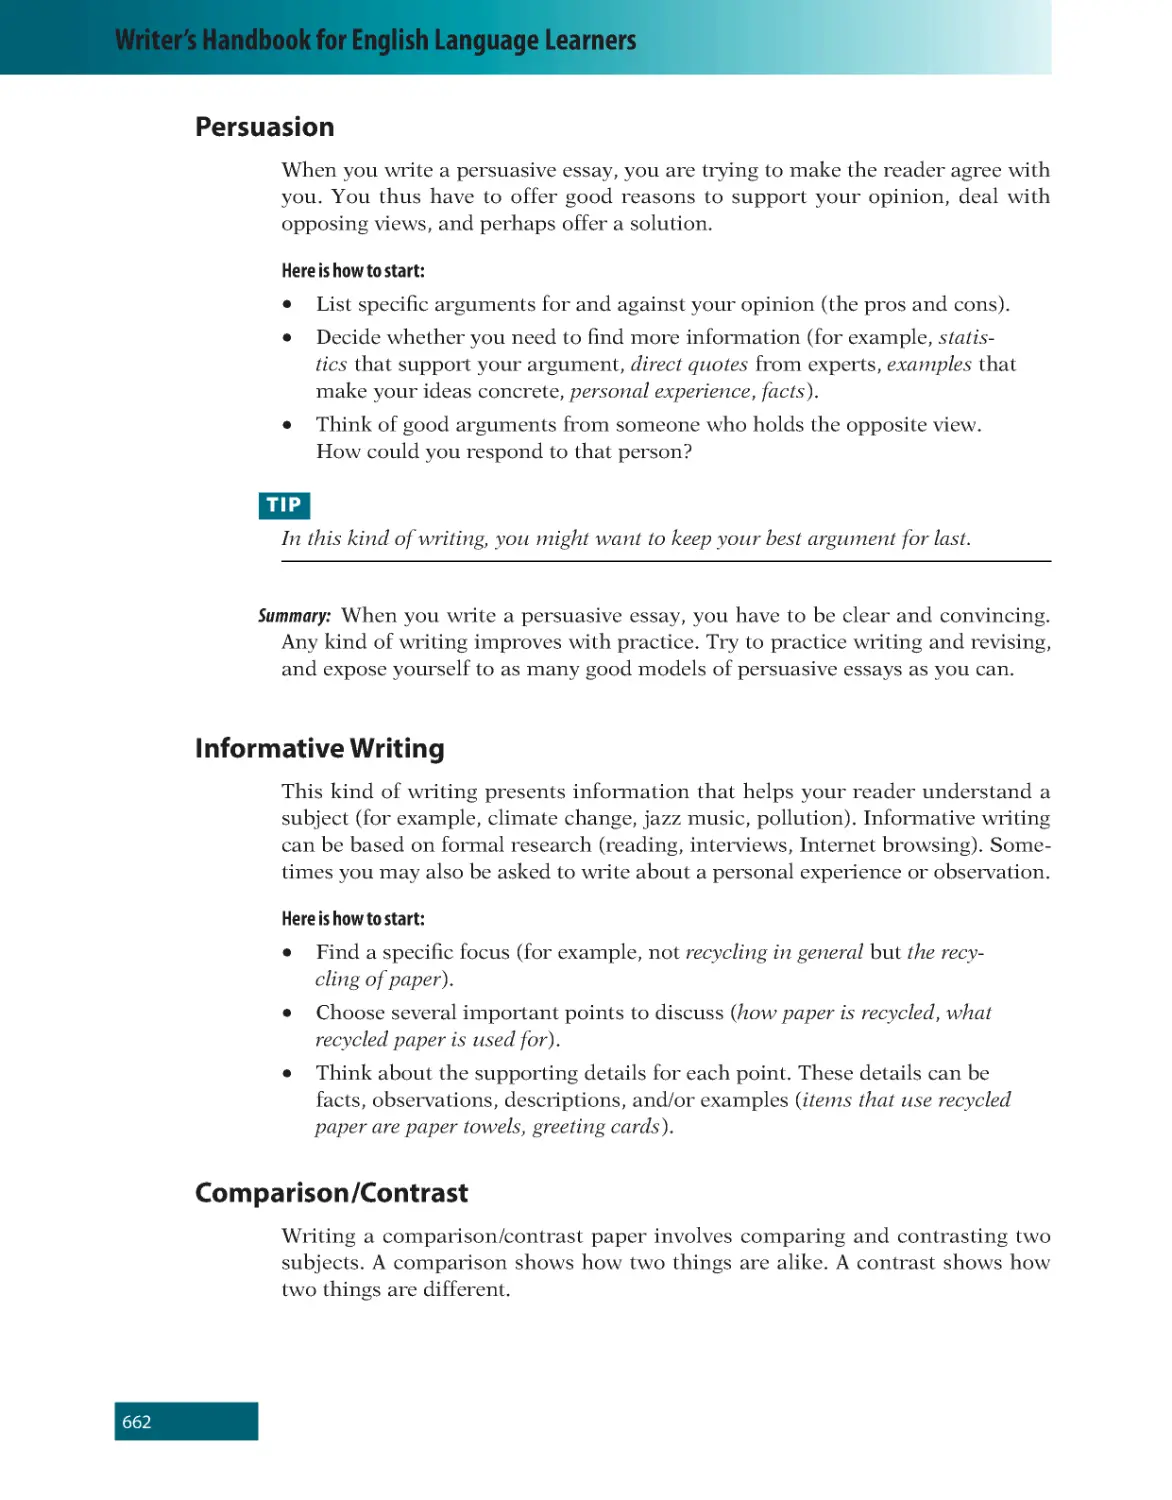 Informative Writing
Comparison/Contrast